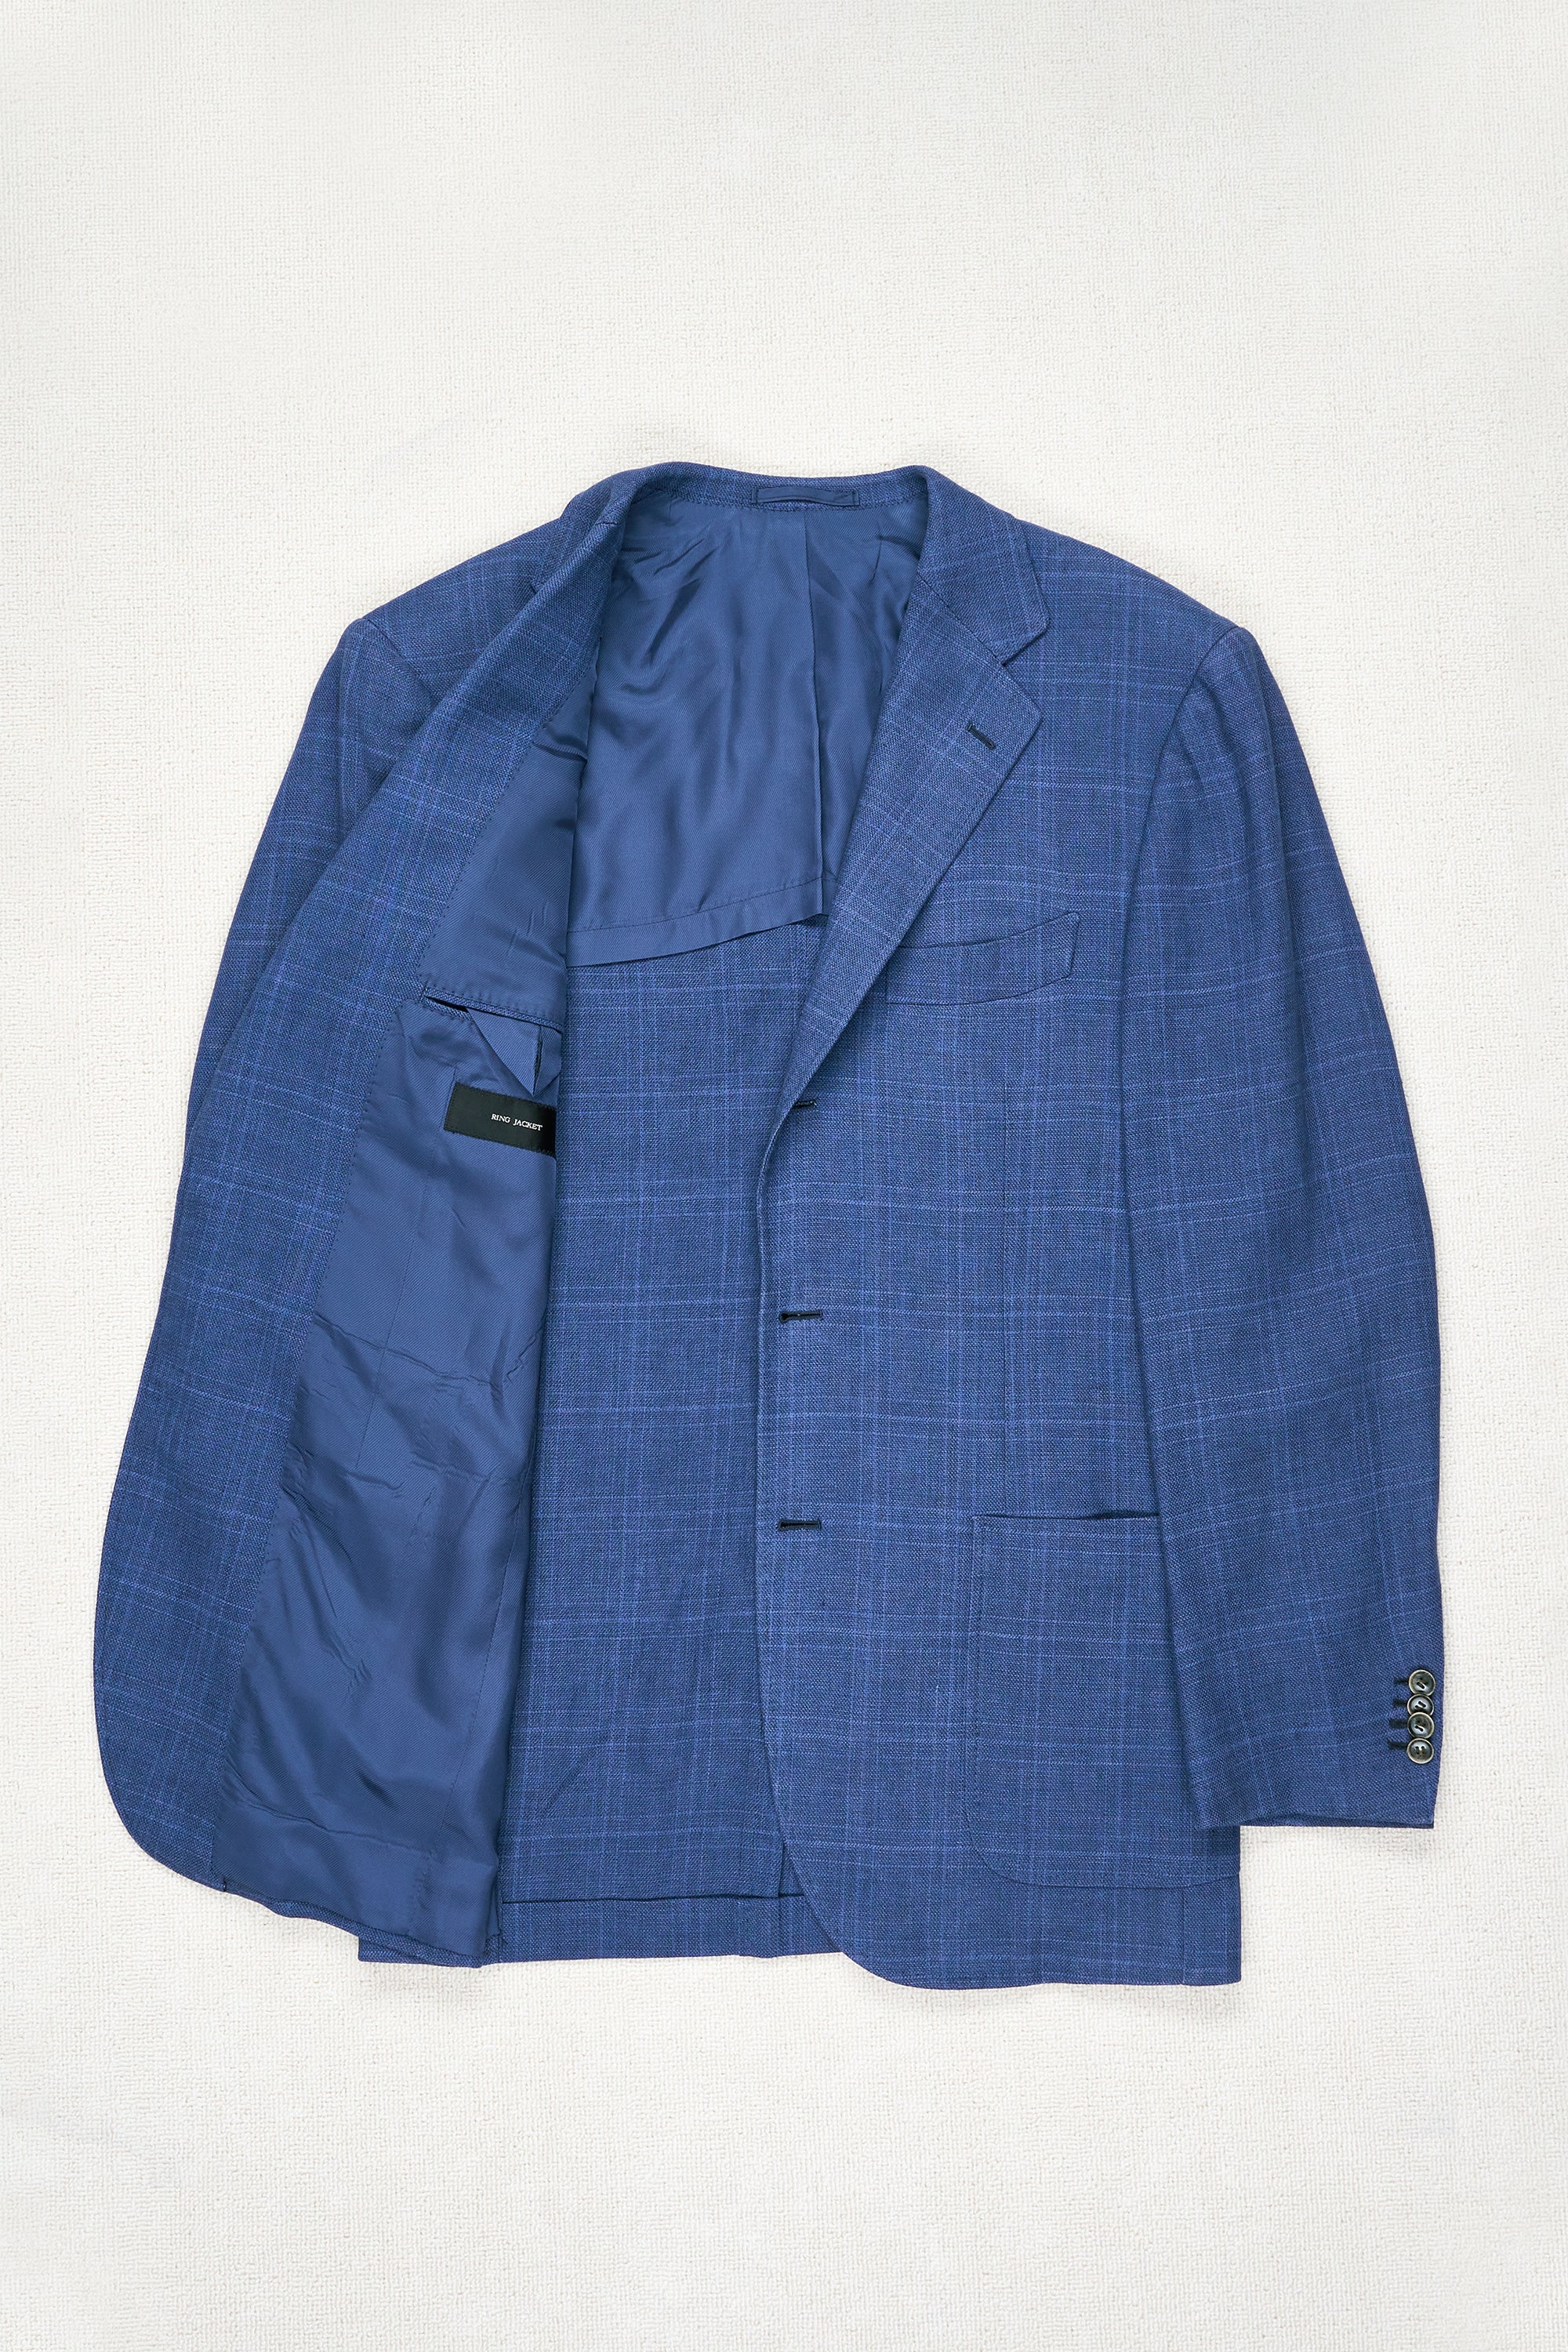 Ring Jacket AMJ01 Blue Water Linen Check Sport Coat